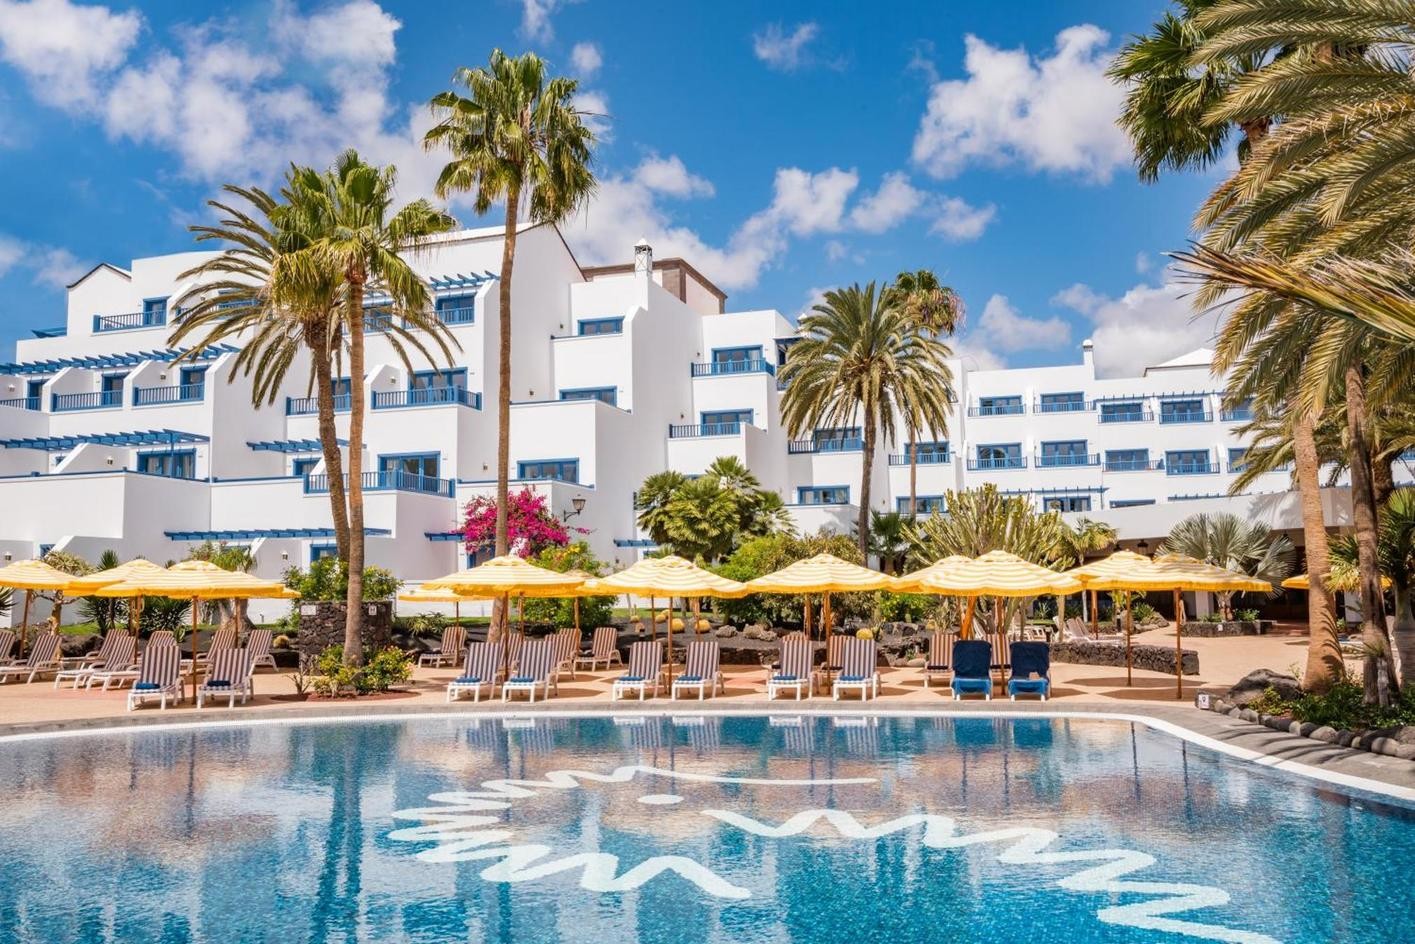 Seaside Los Jameos, the best all-inclusive hotel in Puerto del Carmen